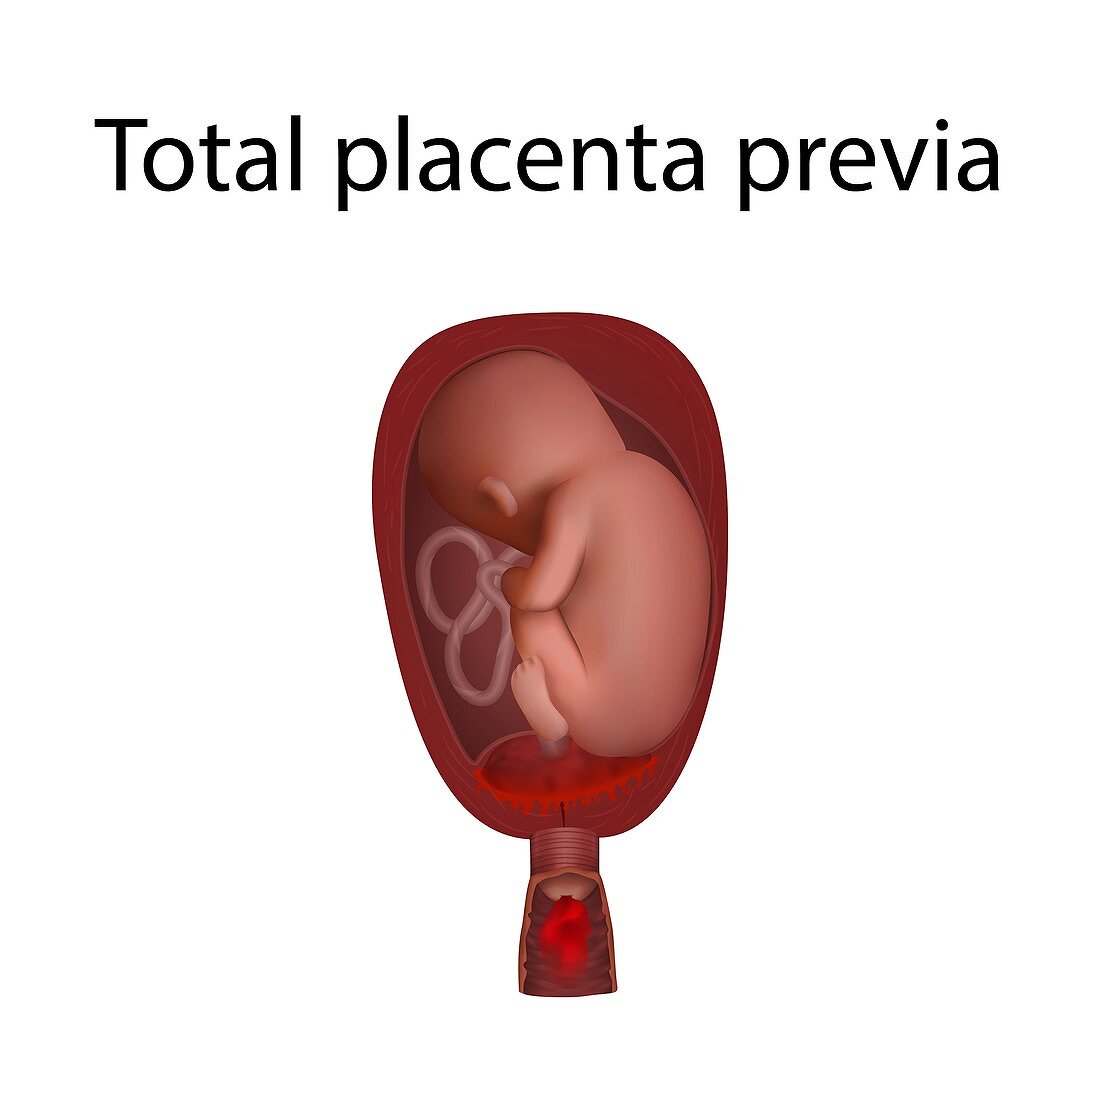 Total placenta previa, illustration